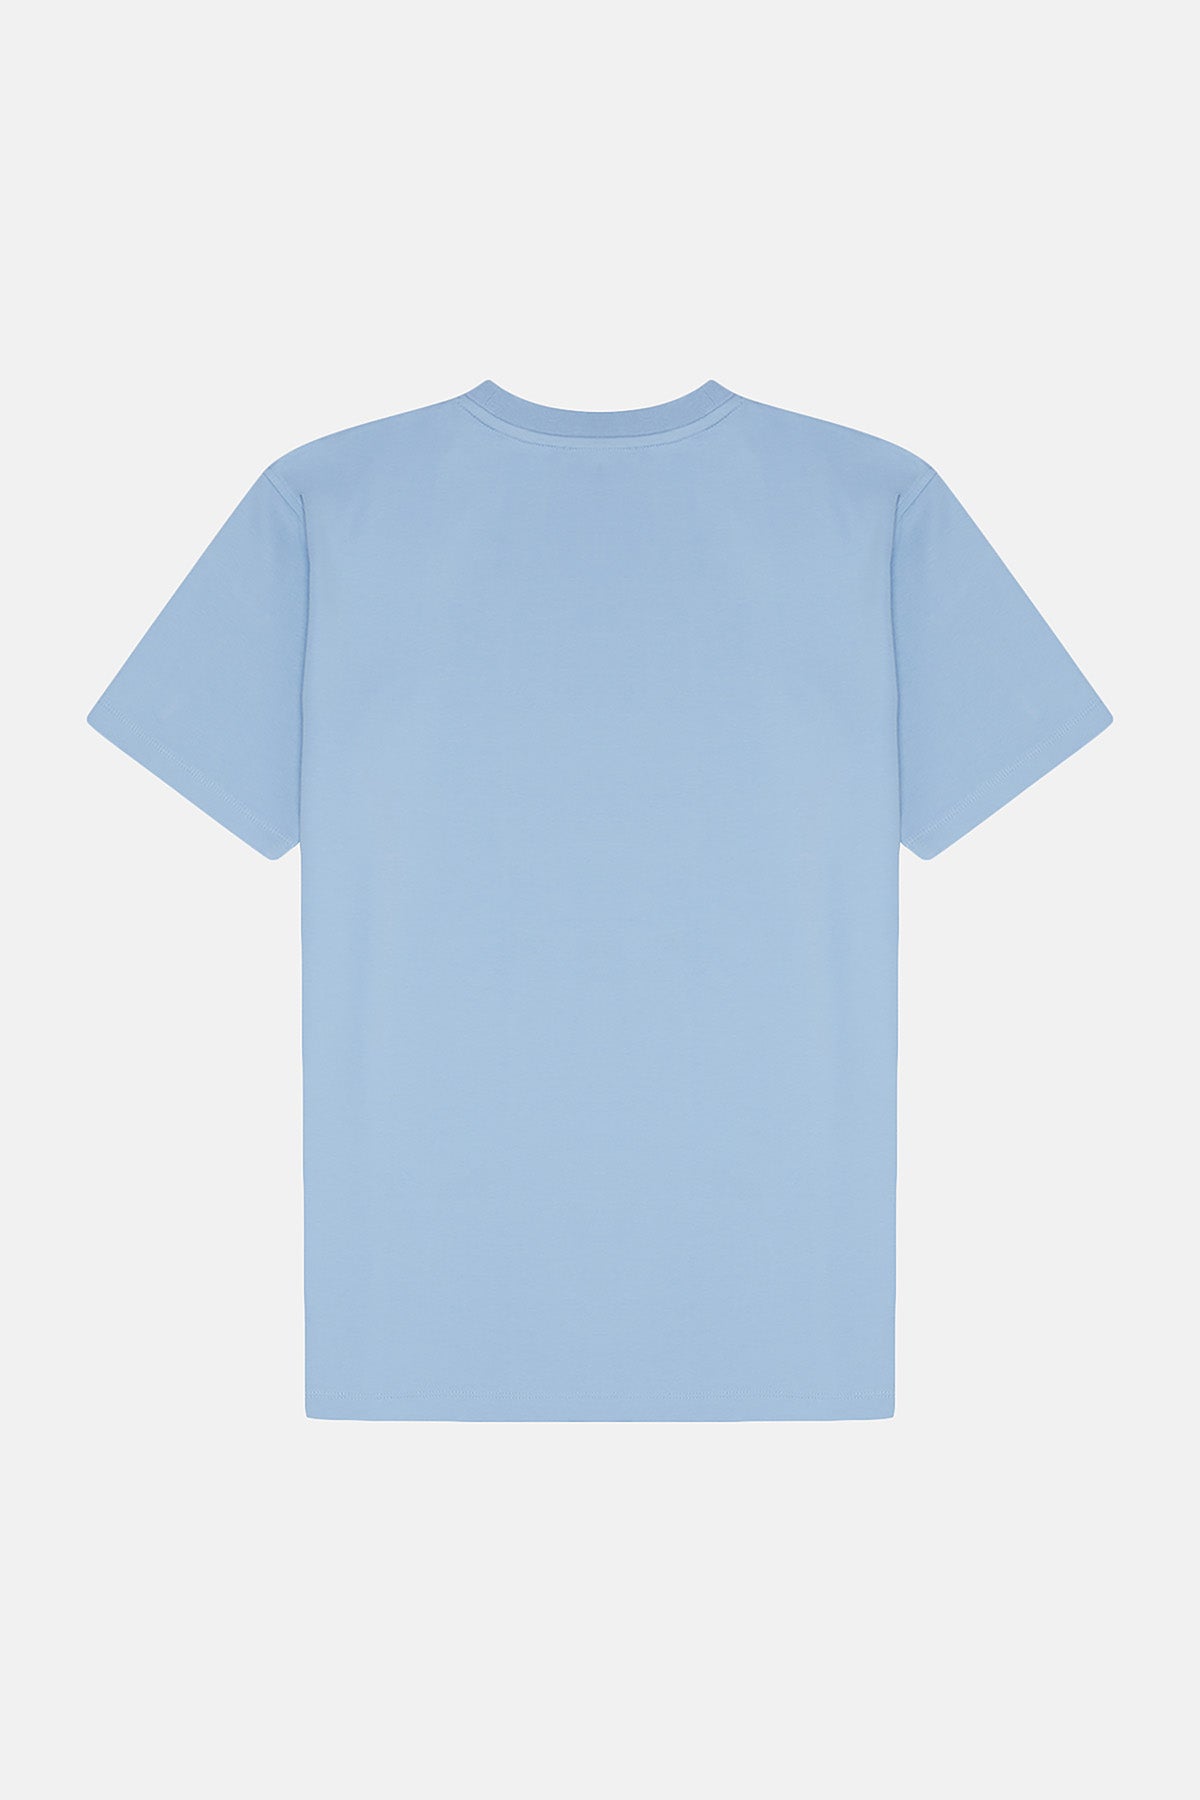 Socrates Logo Premium T-Shirt - Mavi